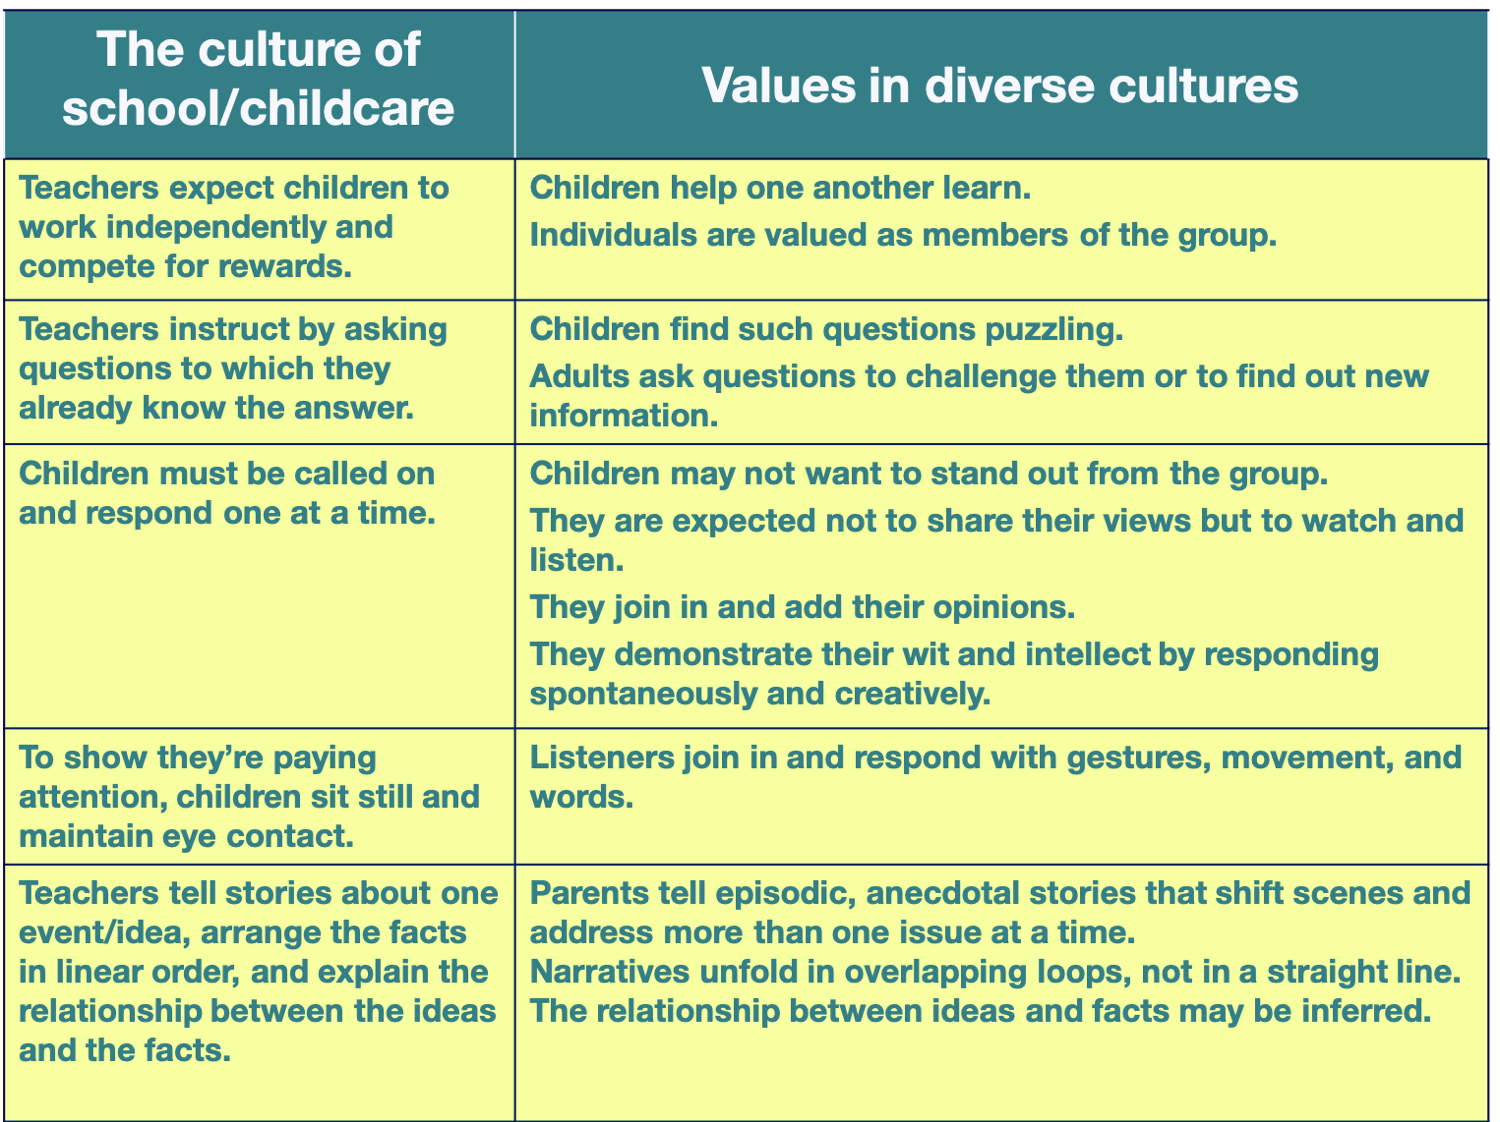 Culture of school/childcare vs. values in diverse cultures